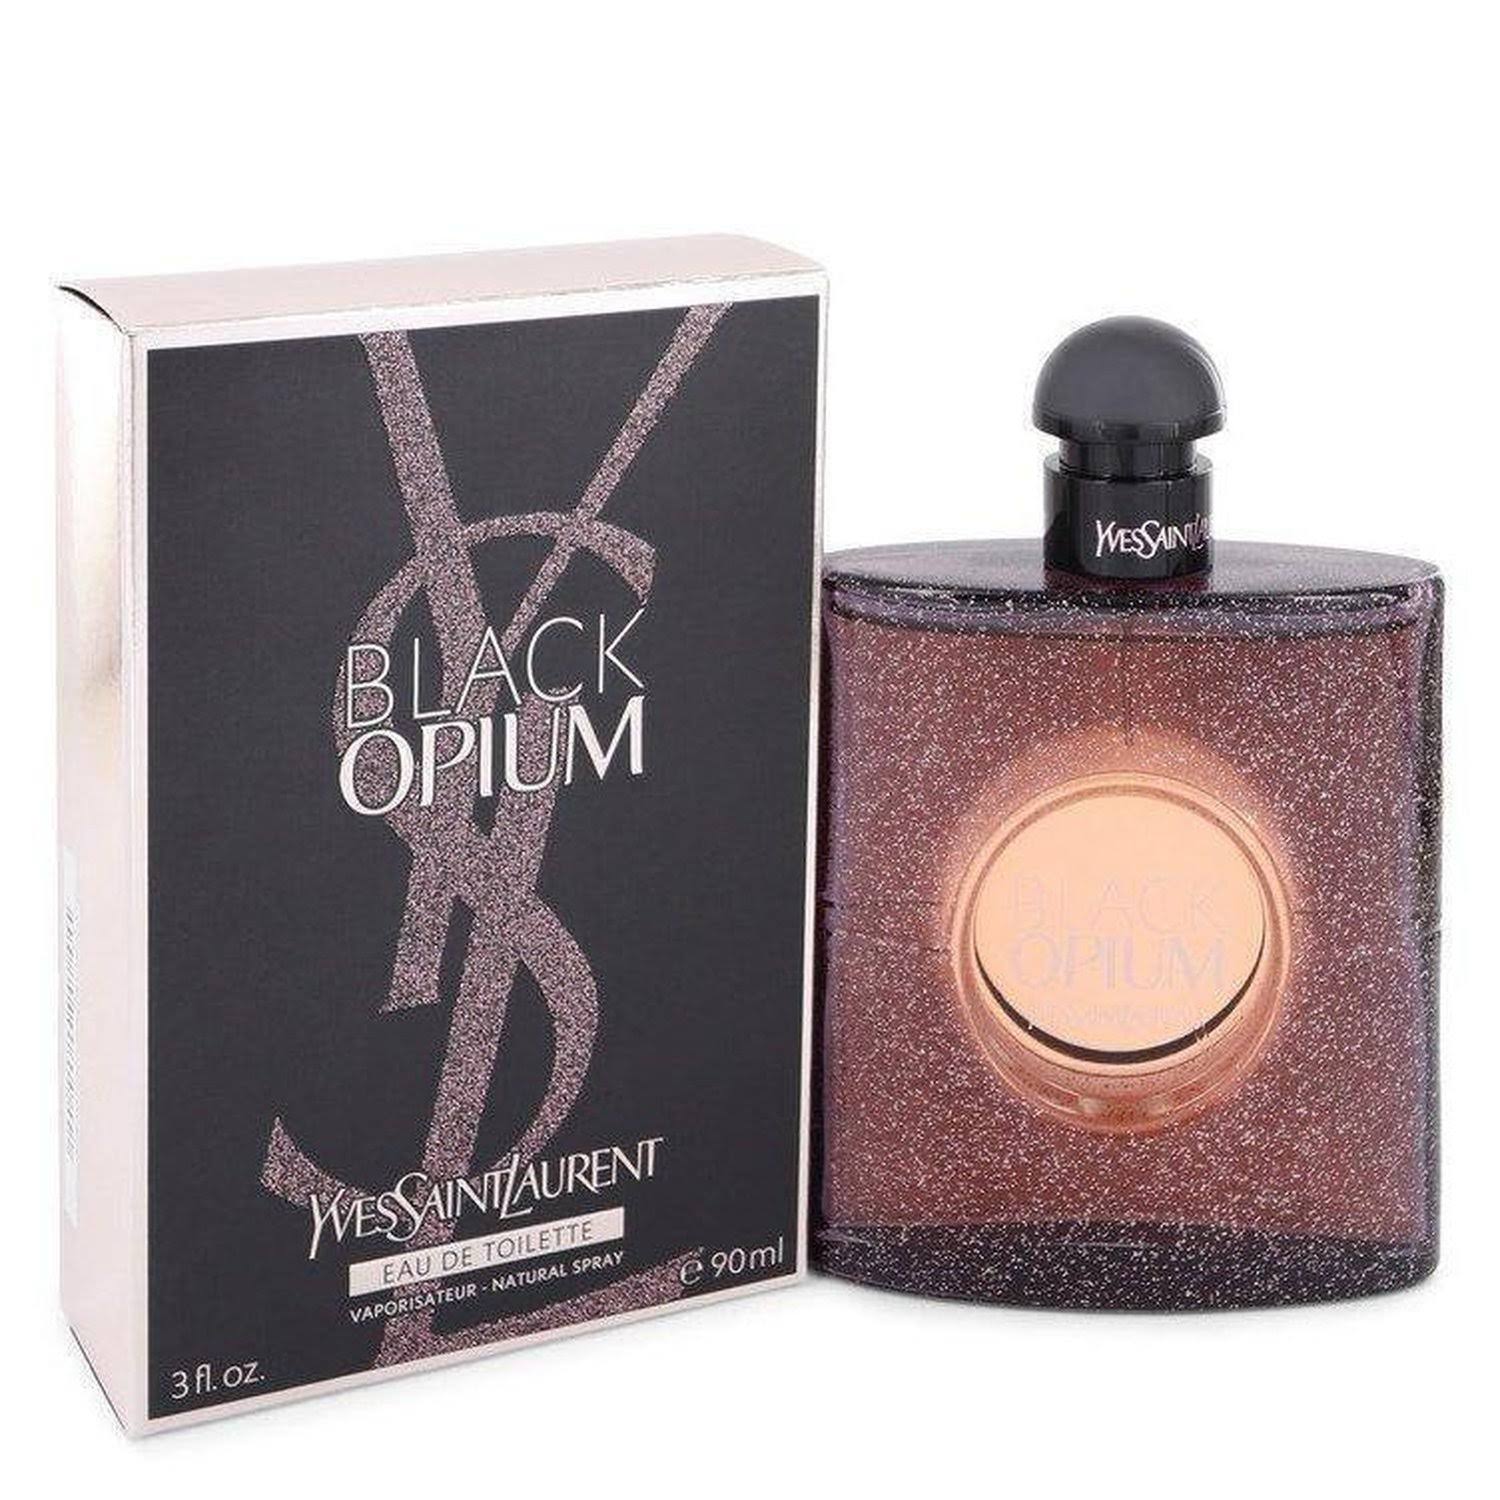 Yves Saint Laurent Opium Black Glowing Eau De Toilette 90ml Spray